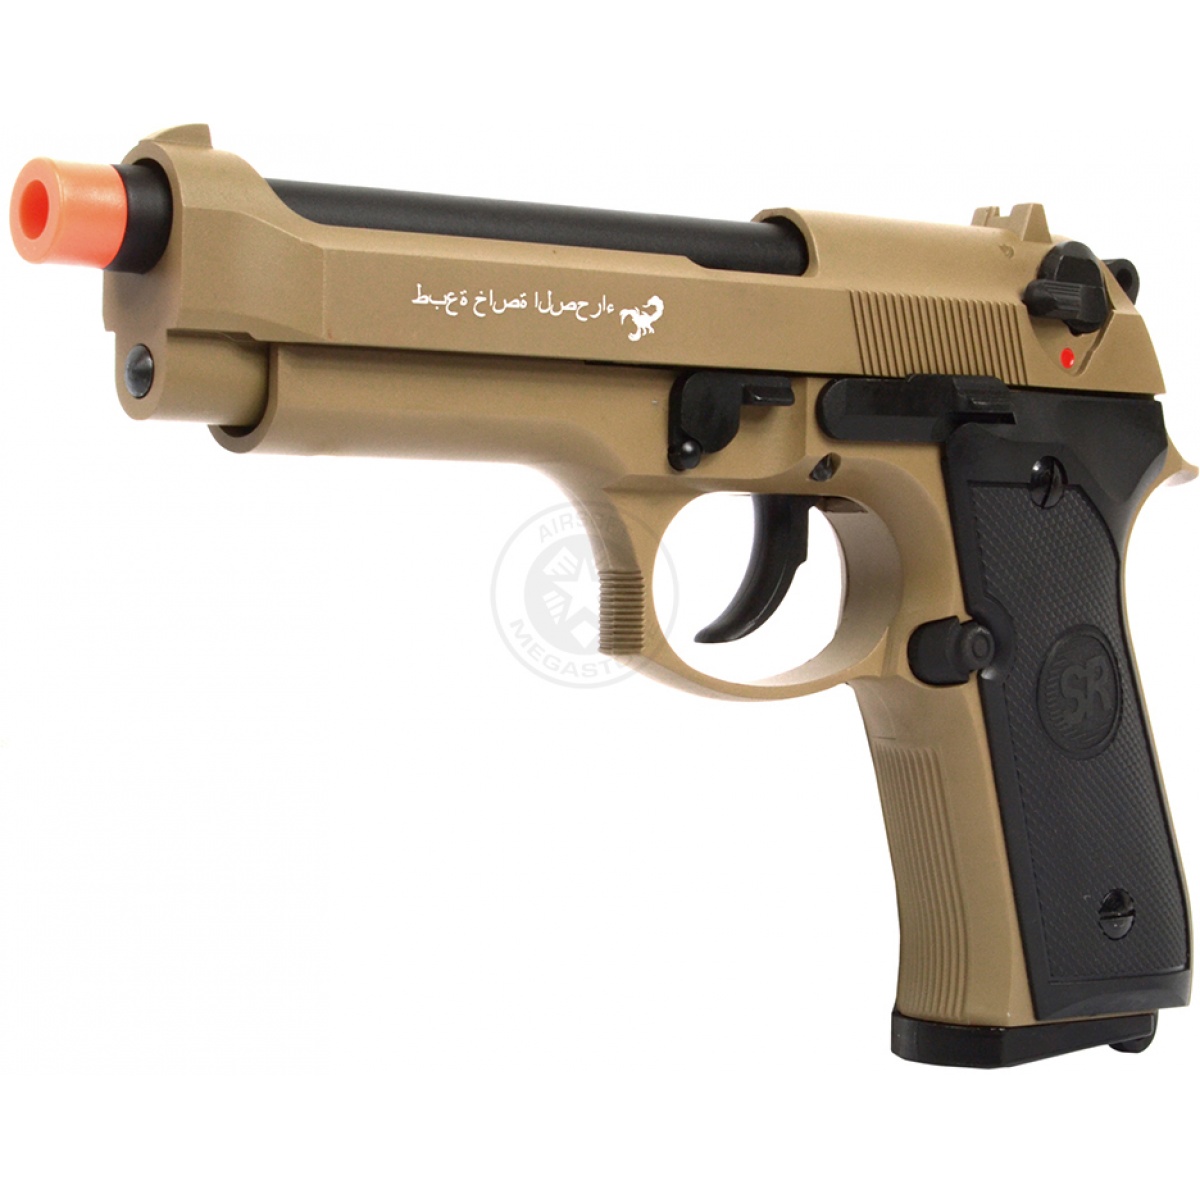 Pistola Airsoft Beretta SR92 Platinum SRC GBB 6mm - Full Metal - E&G  Comércio - Airsoft